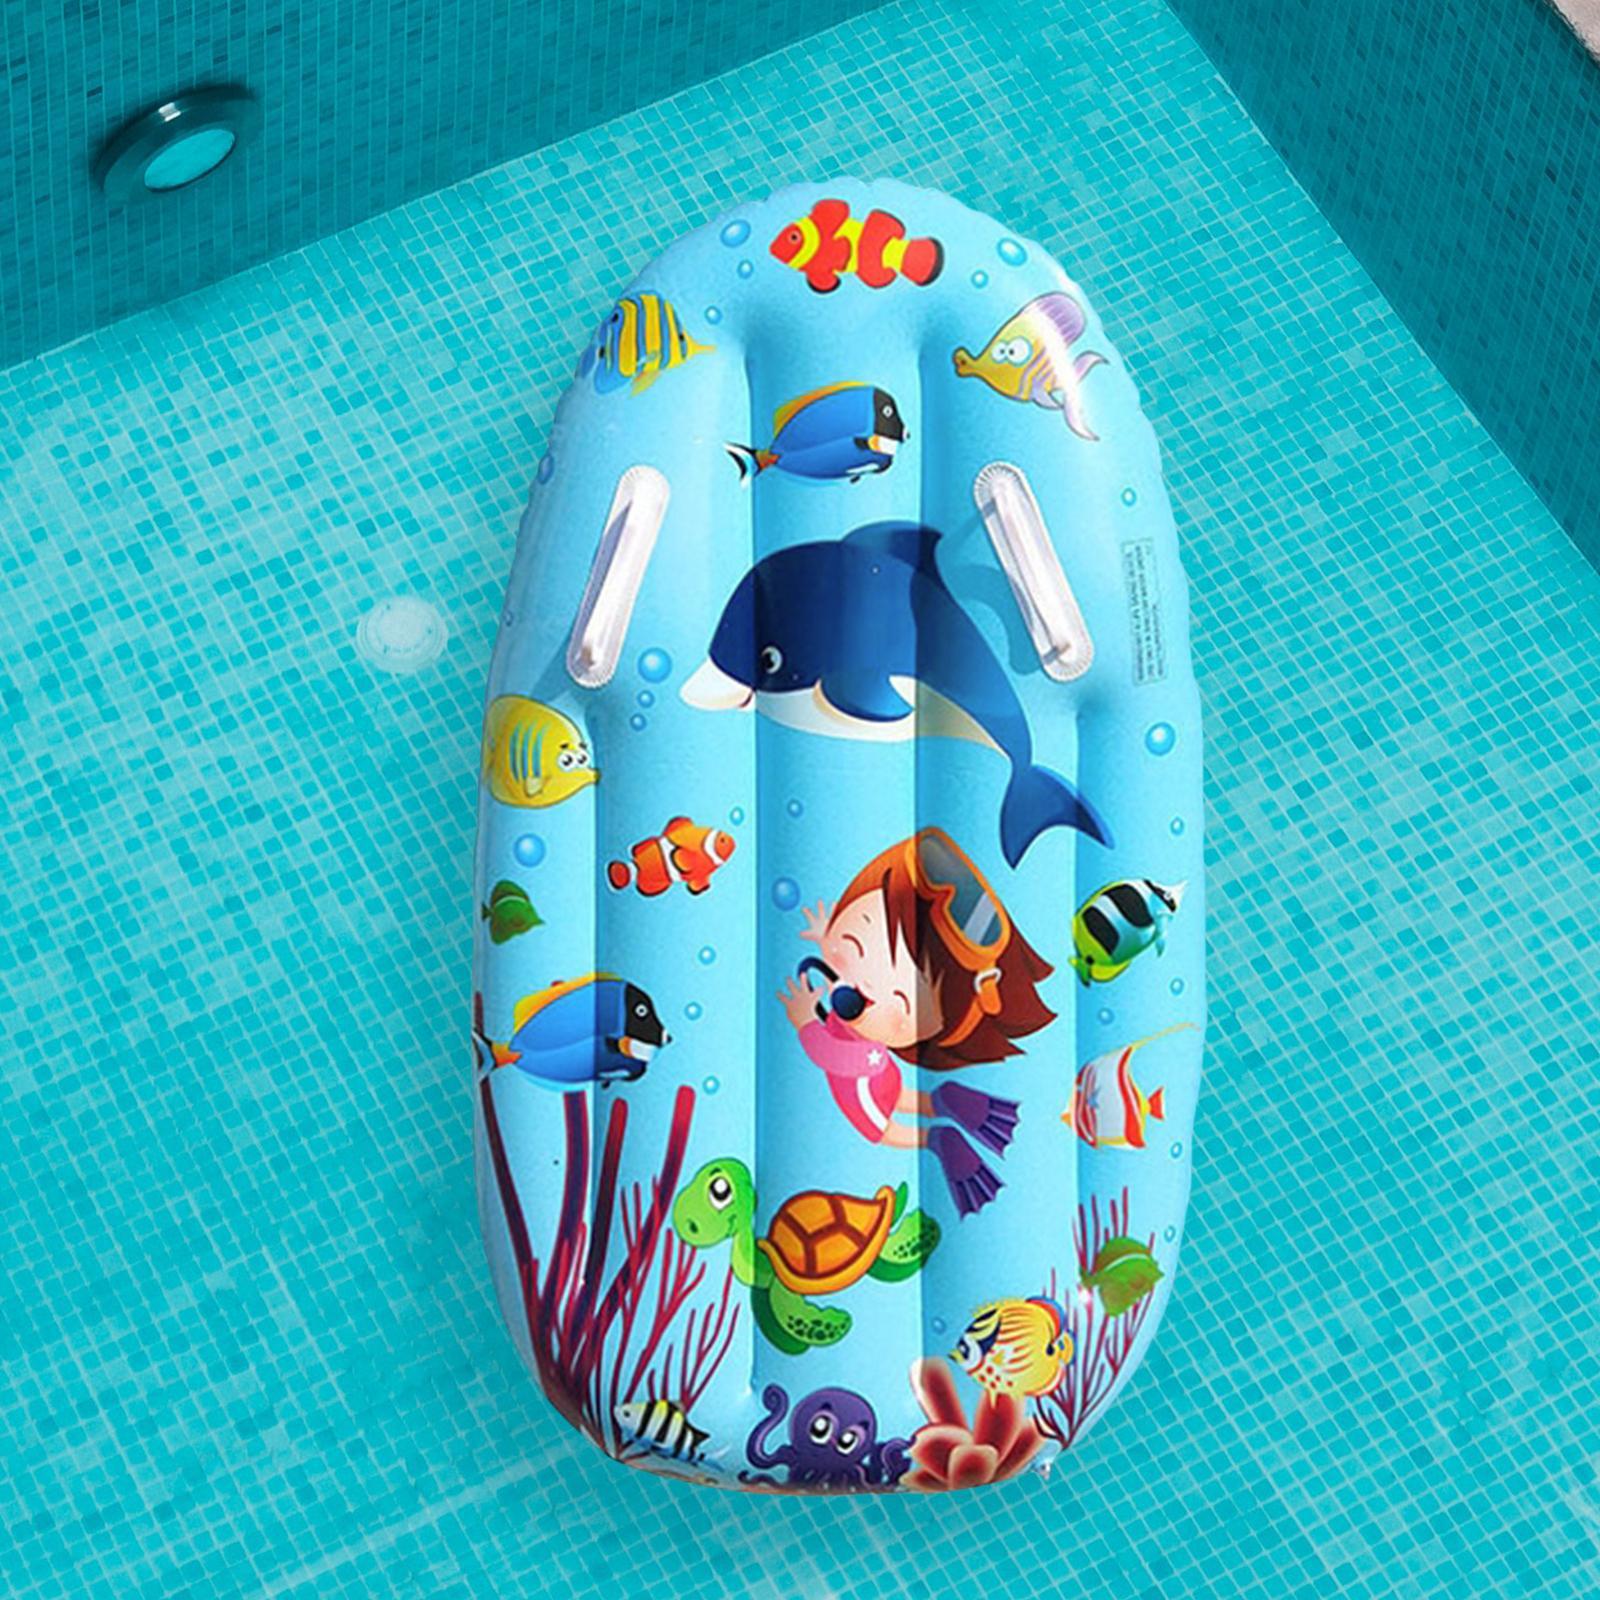 Inflatable  for Kids Lightweight Beach Toys Summer Beach Surf Board